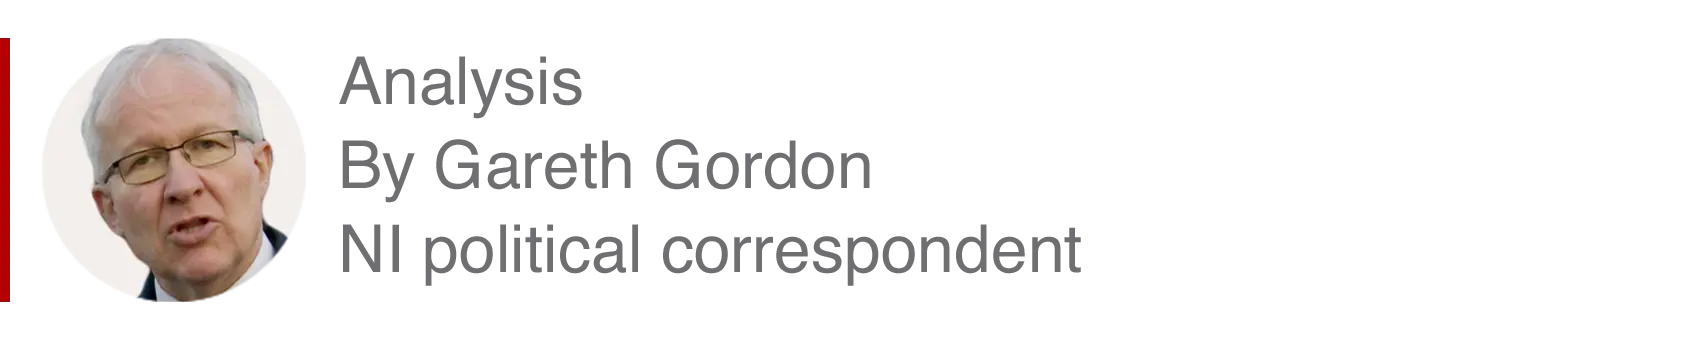 Analysis box by Gareth Gordon, NI political correspondent